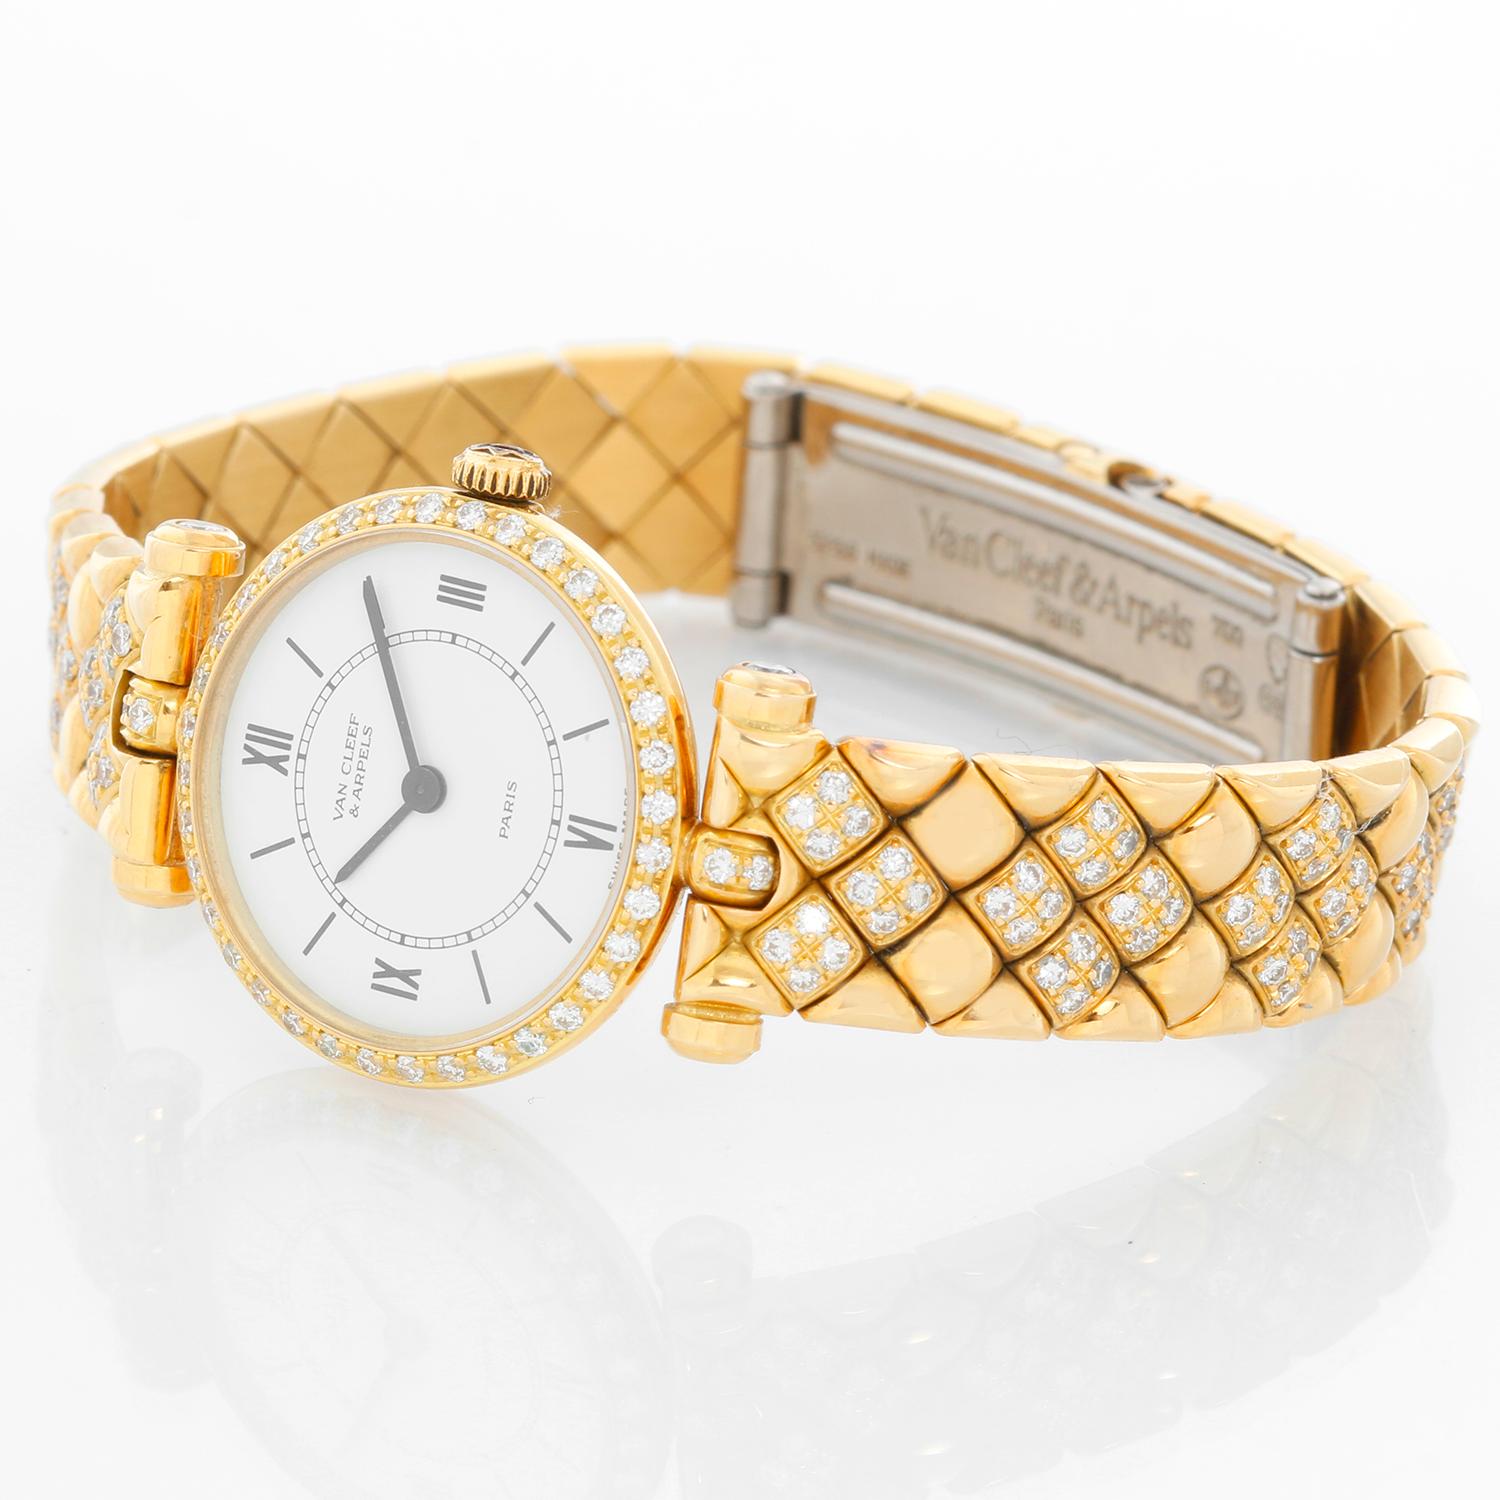 Van Cleef & Arpels Classique Paris Ladies Watch 18901B1 - Quartz. 18K Yellow gold with diamond bezel ( 20mm ). White dial with black numerals. 18K Yellow gold diamond bracelet with double deployant buckle; Will fit up to a 5 3/4 inch wrist.